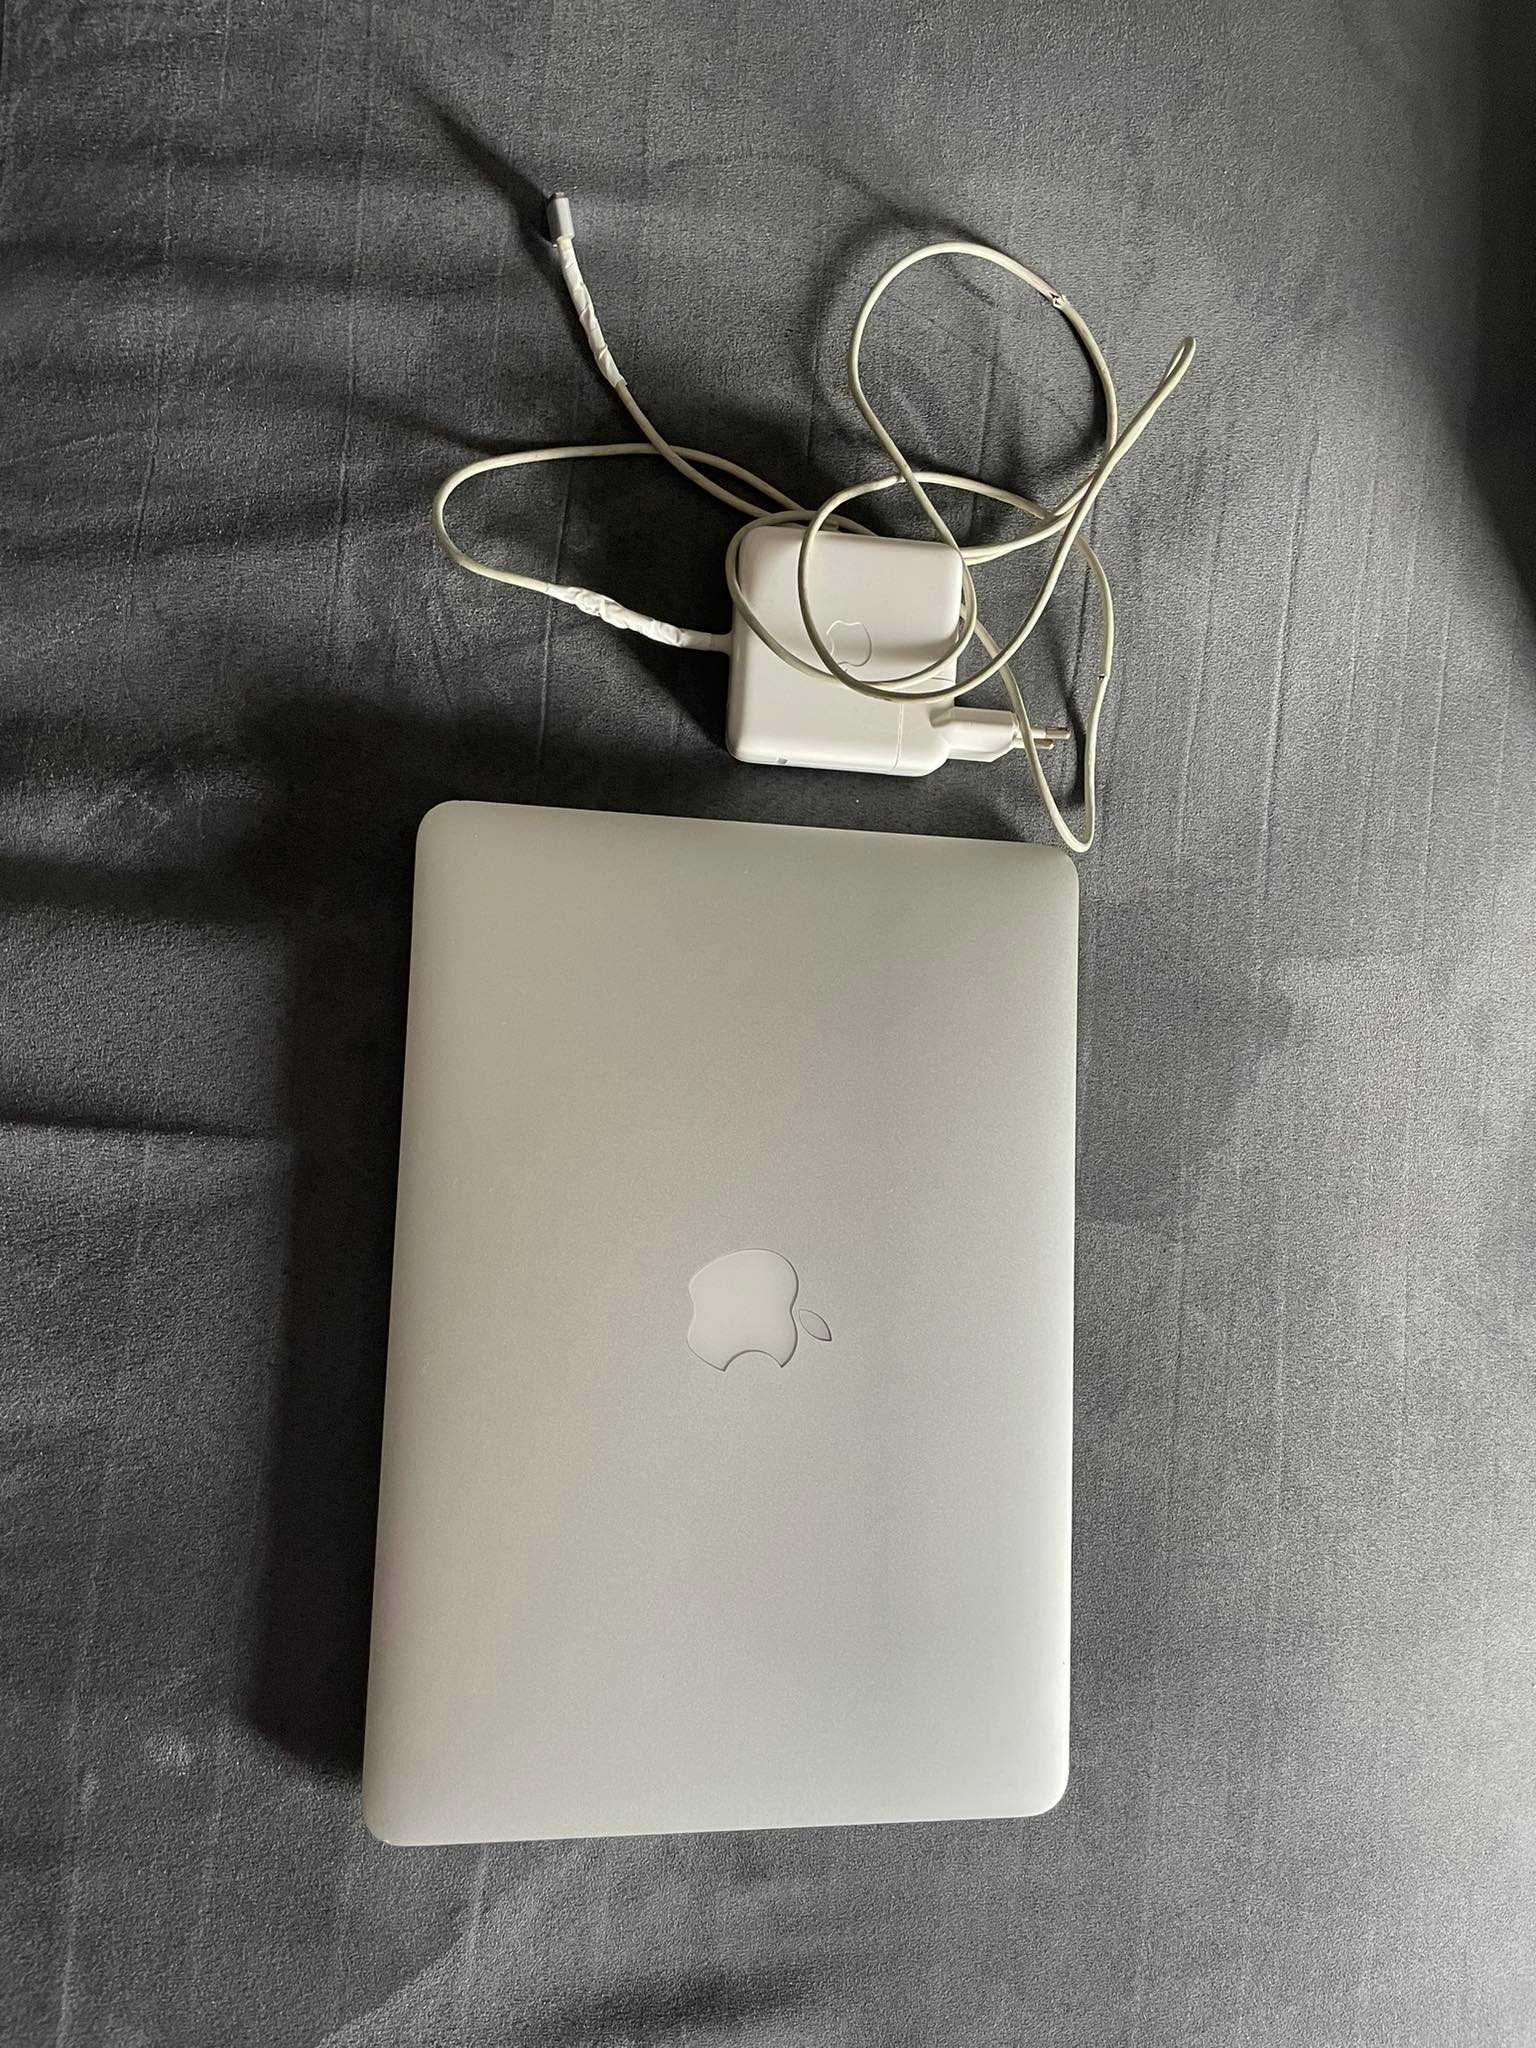 Apple MacBook Pro 13,3' Early 2015 8GB 500GB